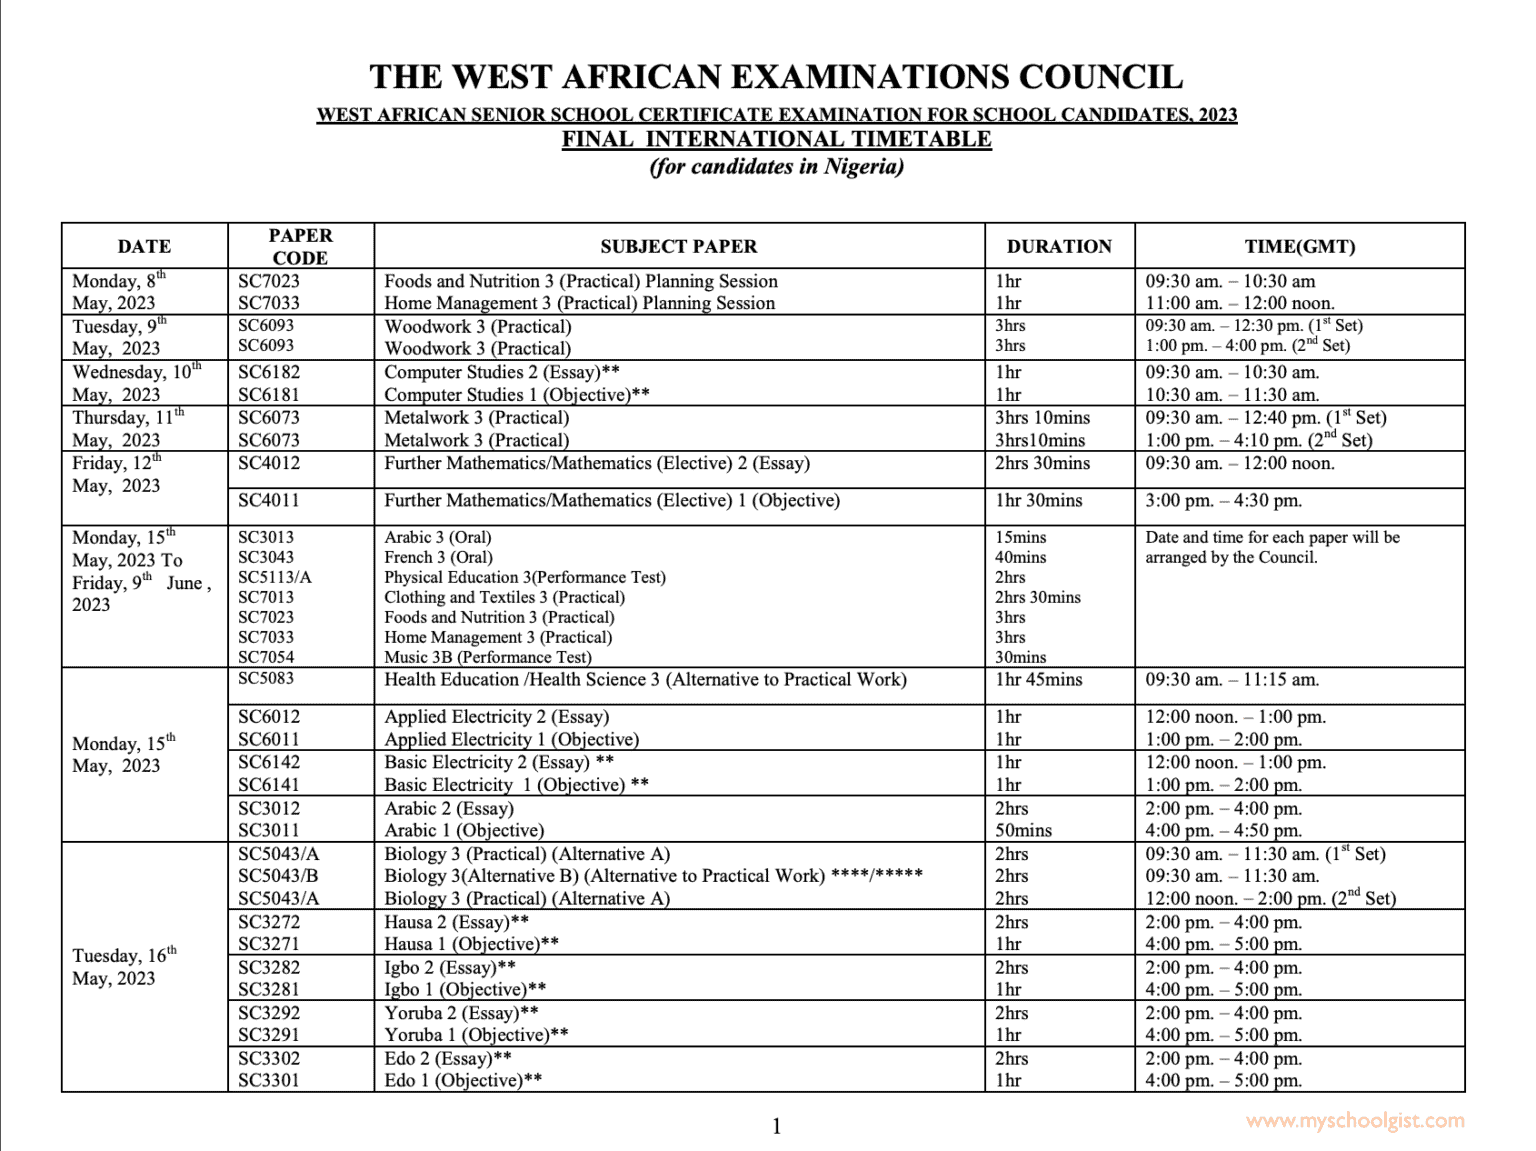 WAEC Timetable 2023 Final 1 1536x1151 